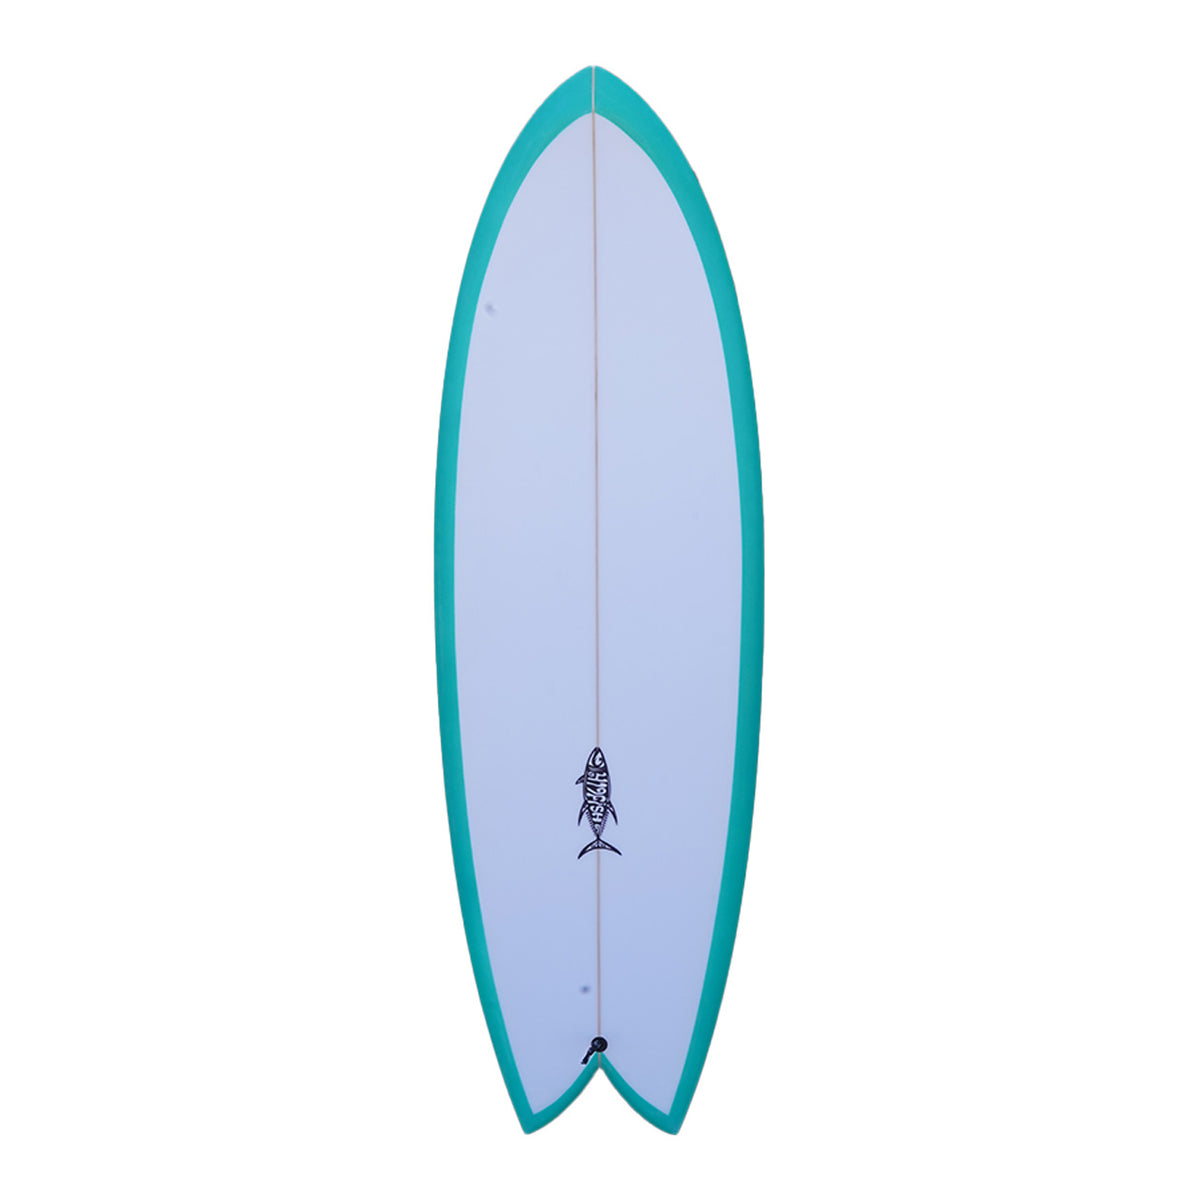 419fish - Alternative - Rusty Surfboards - Top View - Green Rails